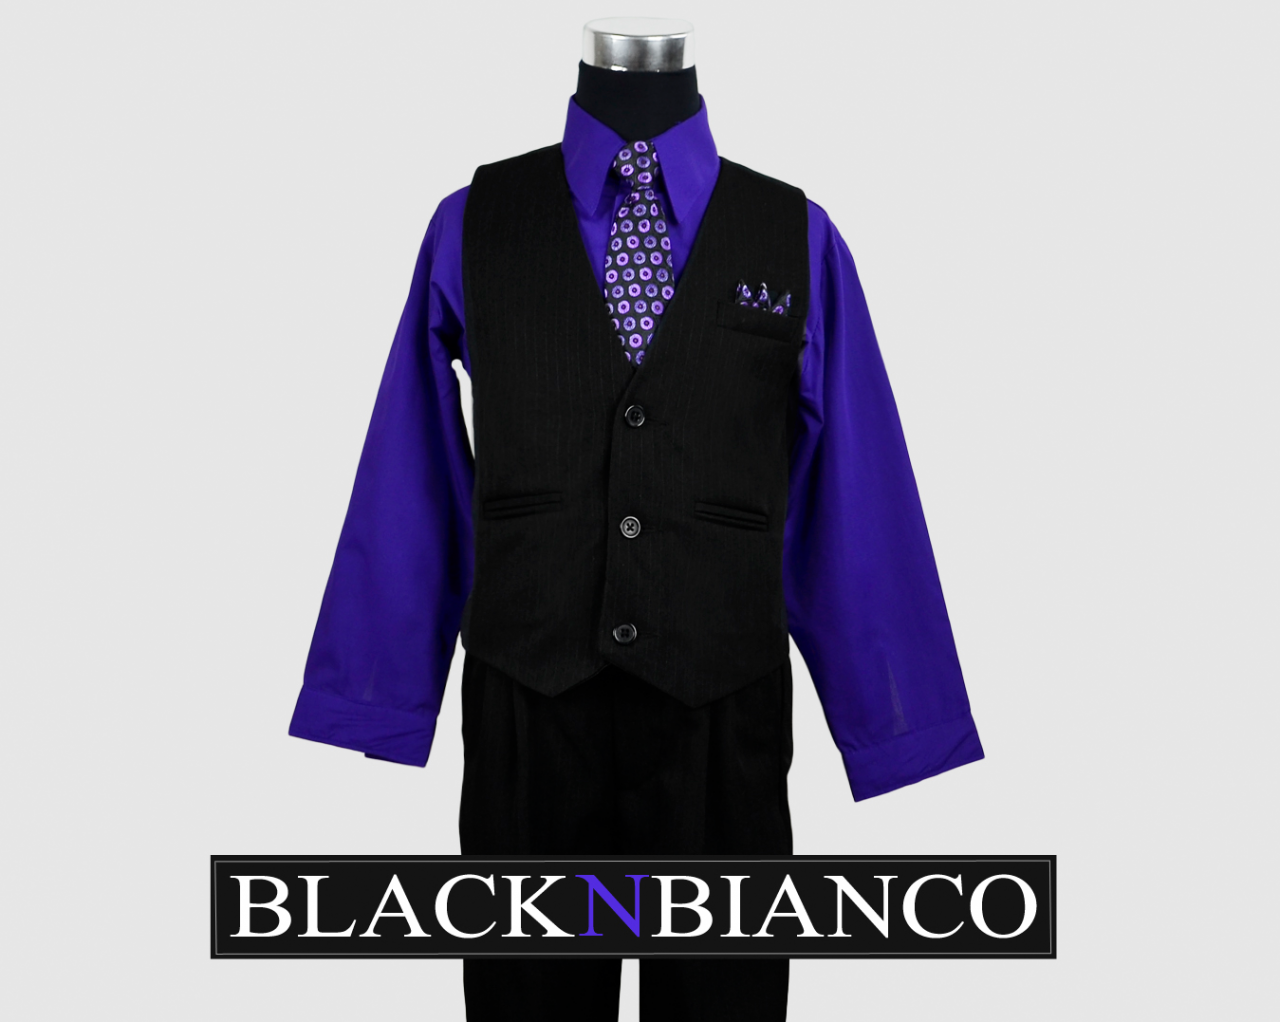 Dressing Purple Shirt Gray Pants Black Stock Photo 175286915 | Shutterstock